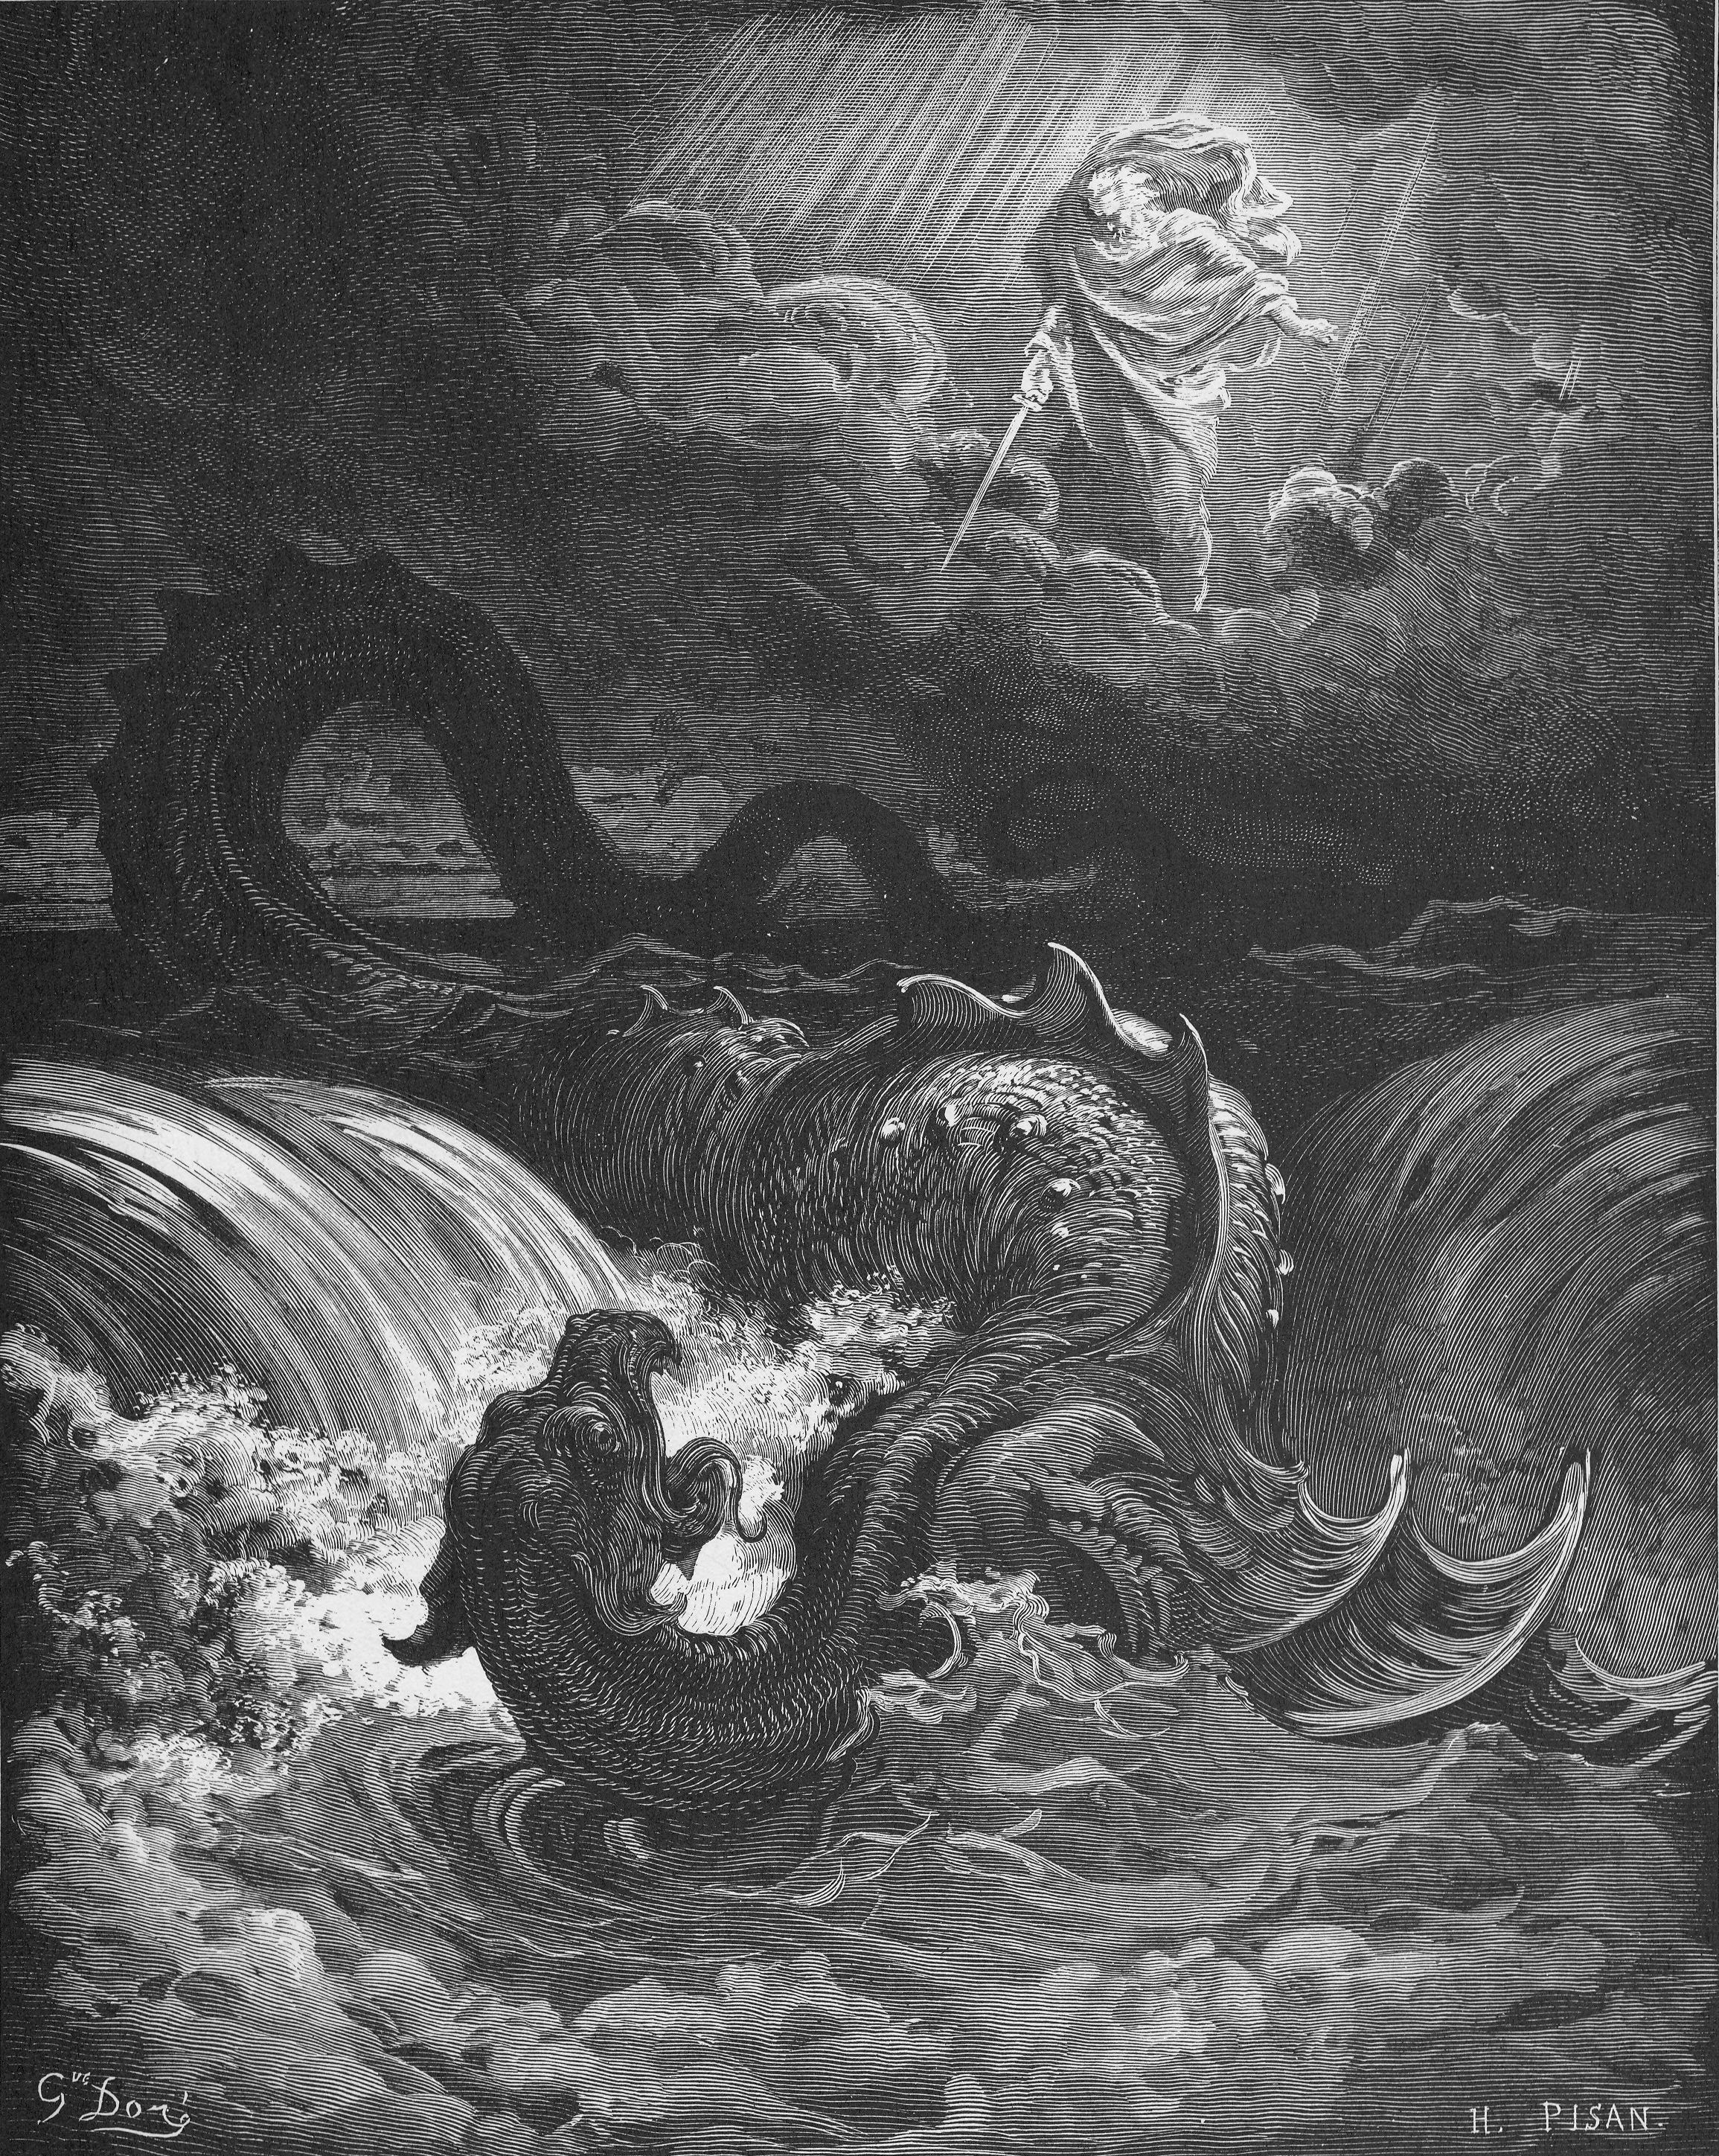 https://classicalartsuniverse.com/wp-content/uploads/2017/04/The-Destruction-of-Leviathan-Gustave-Dore.jpg